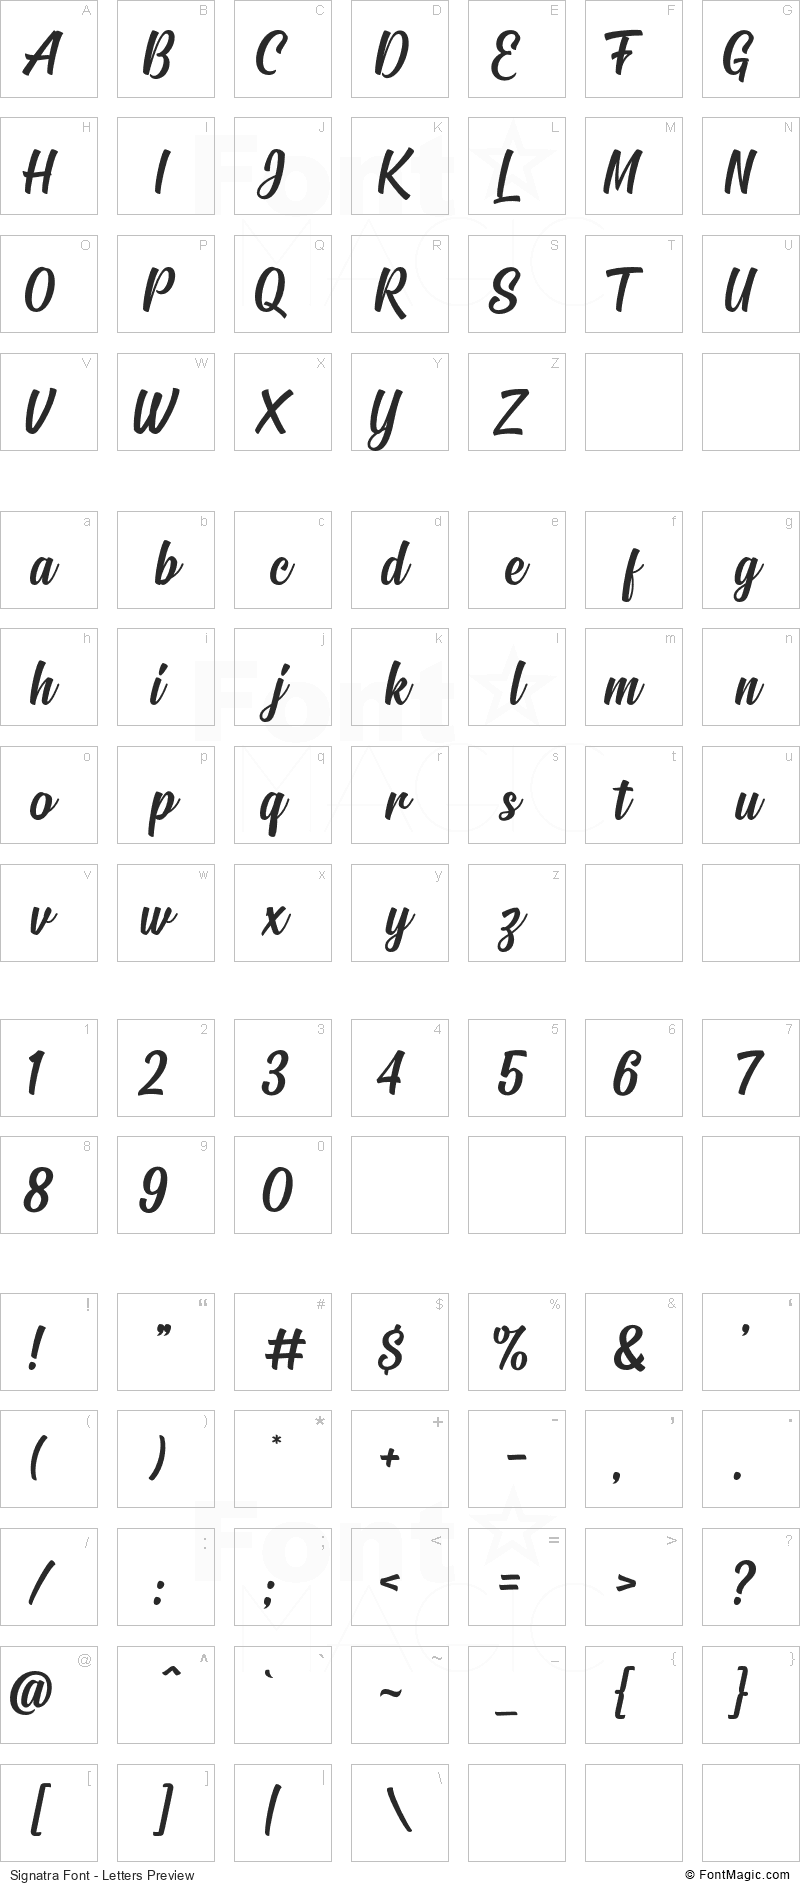 Signatra Font - All Latters Preview Chart